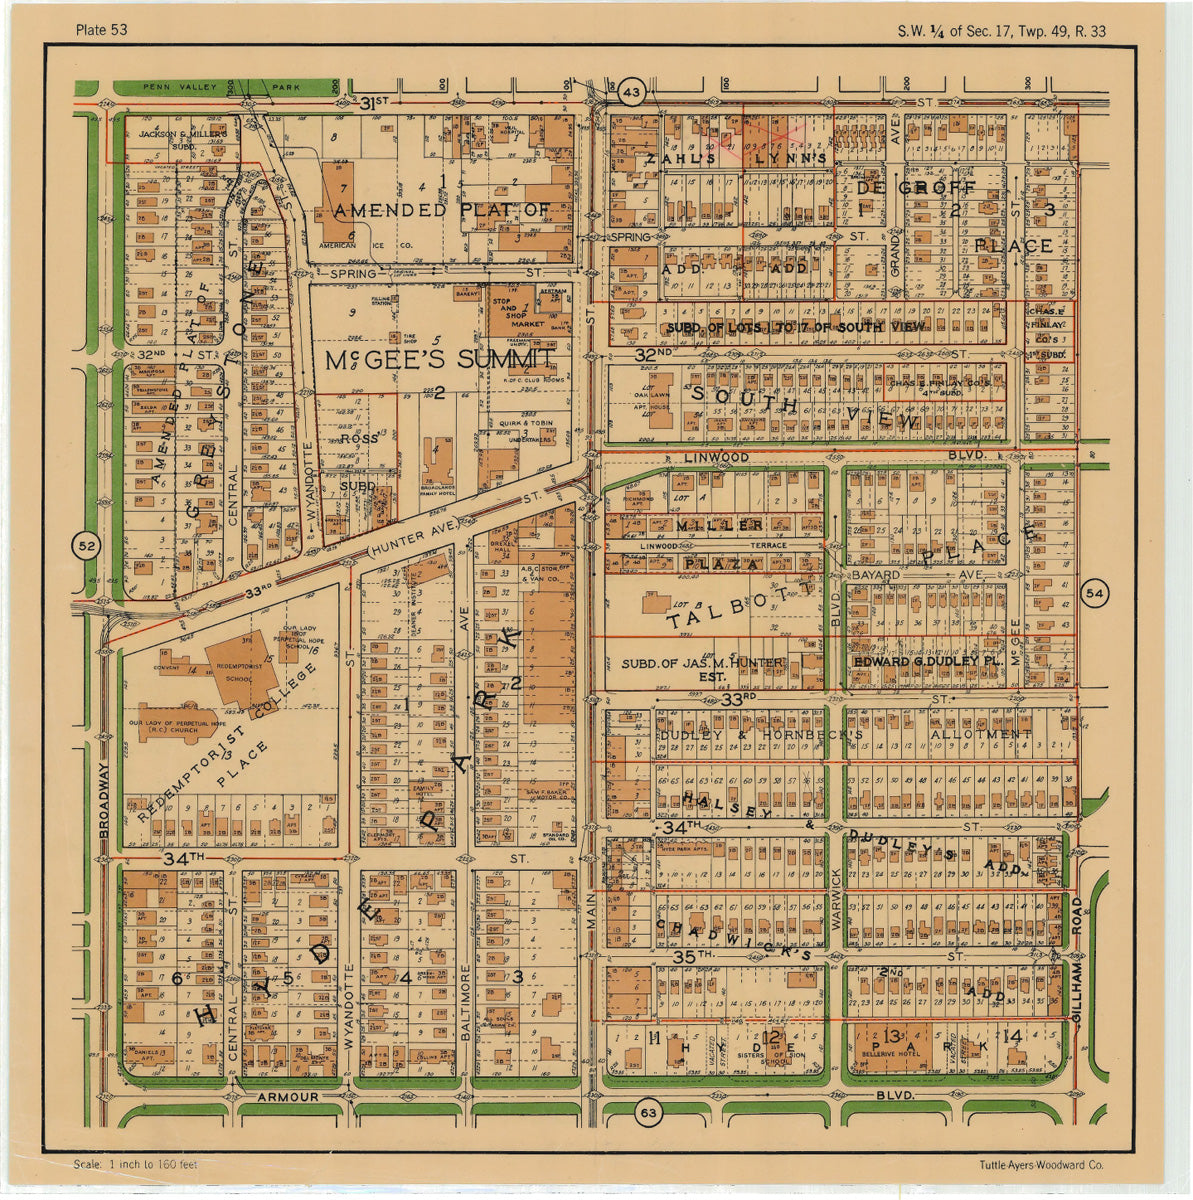 Kansas City 1925 Neighborhood Map - Plate #53 31st-Armour Broadway-Gillham